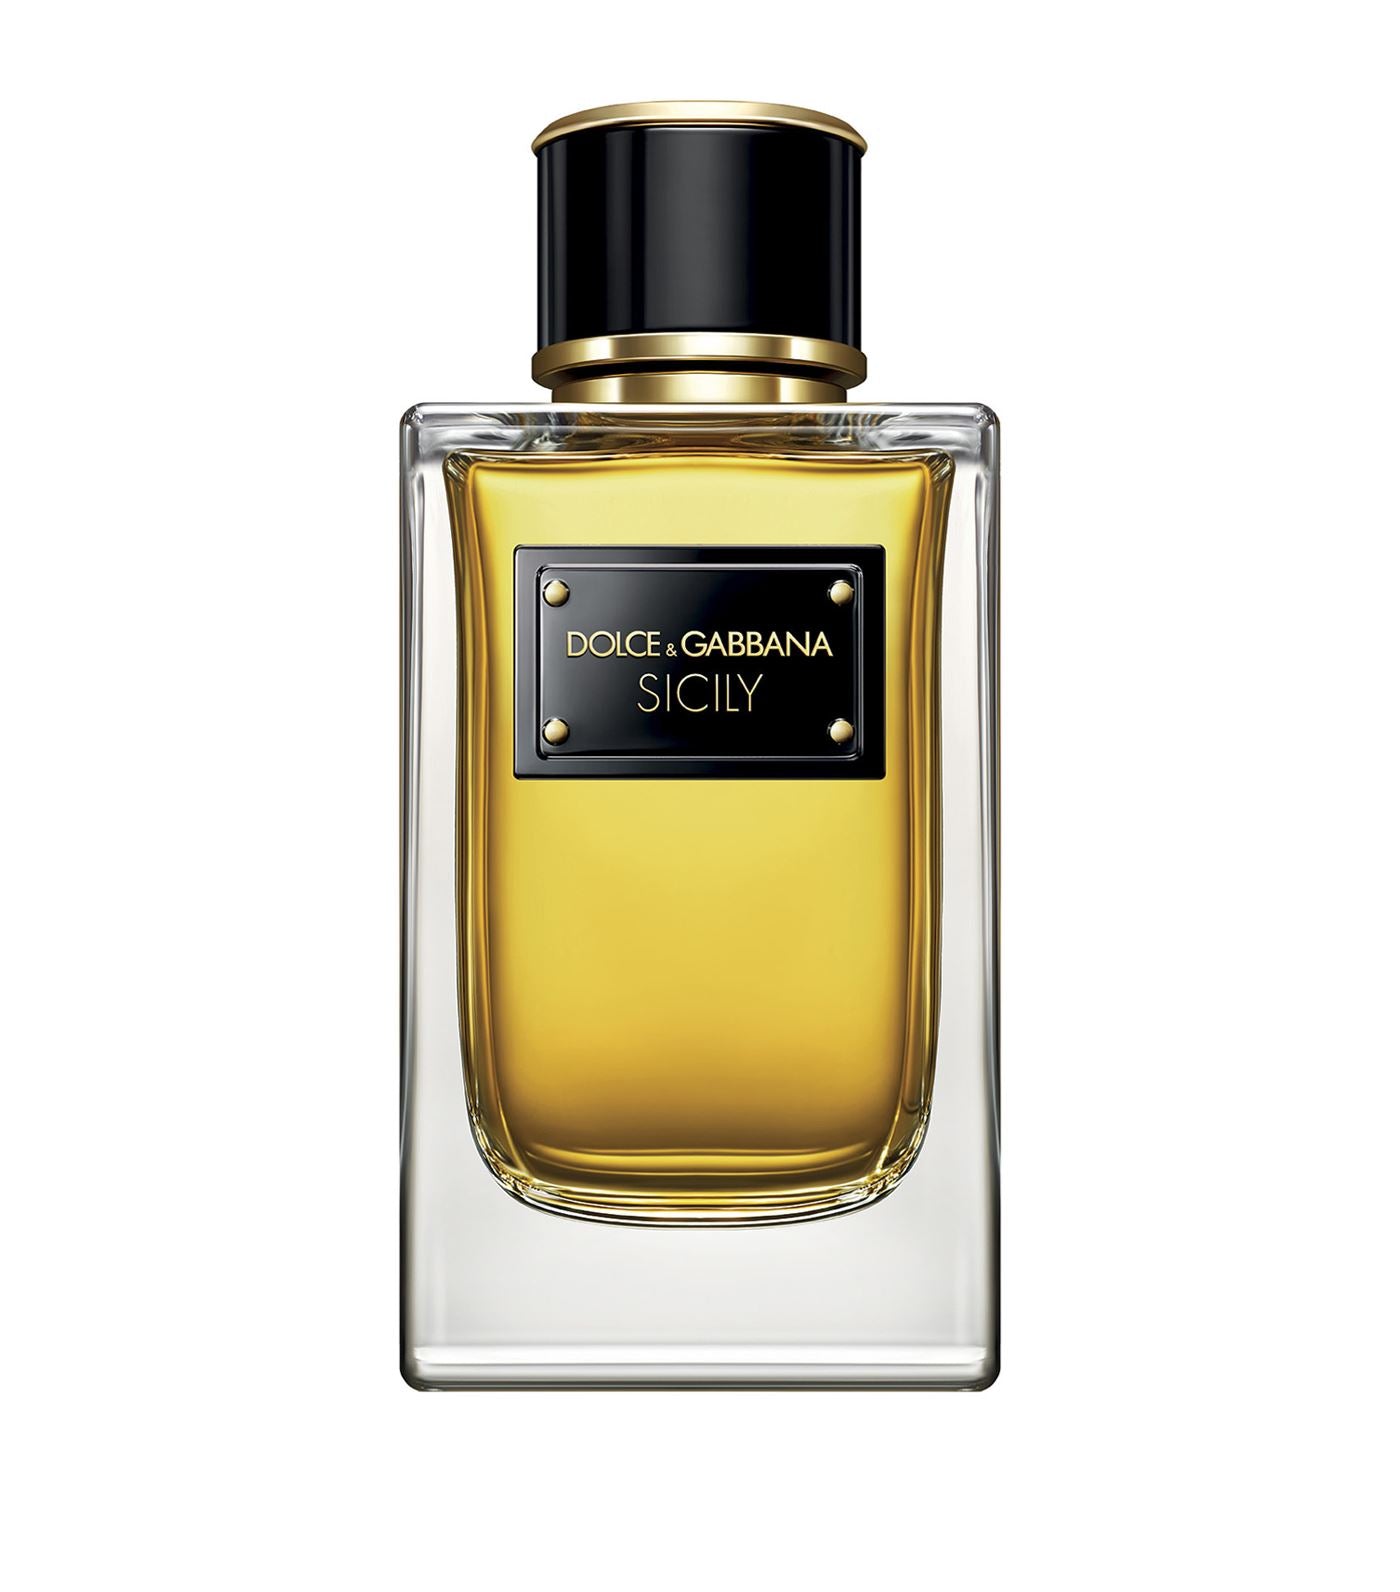 Dolce & Gabbana Sicily parfumūdens 150ml